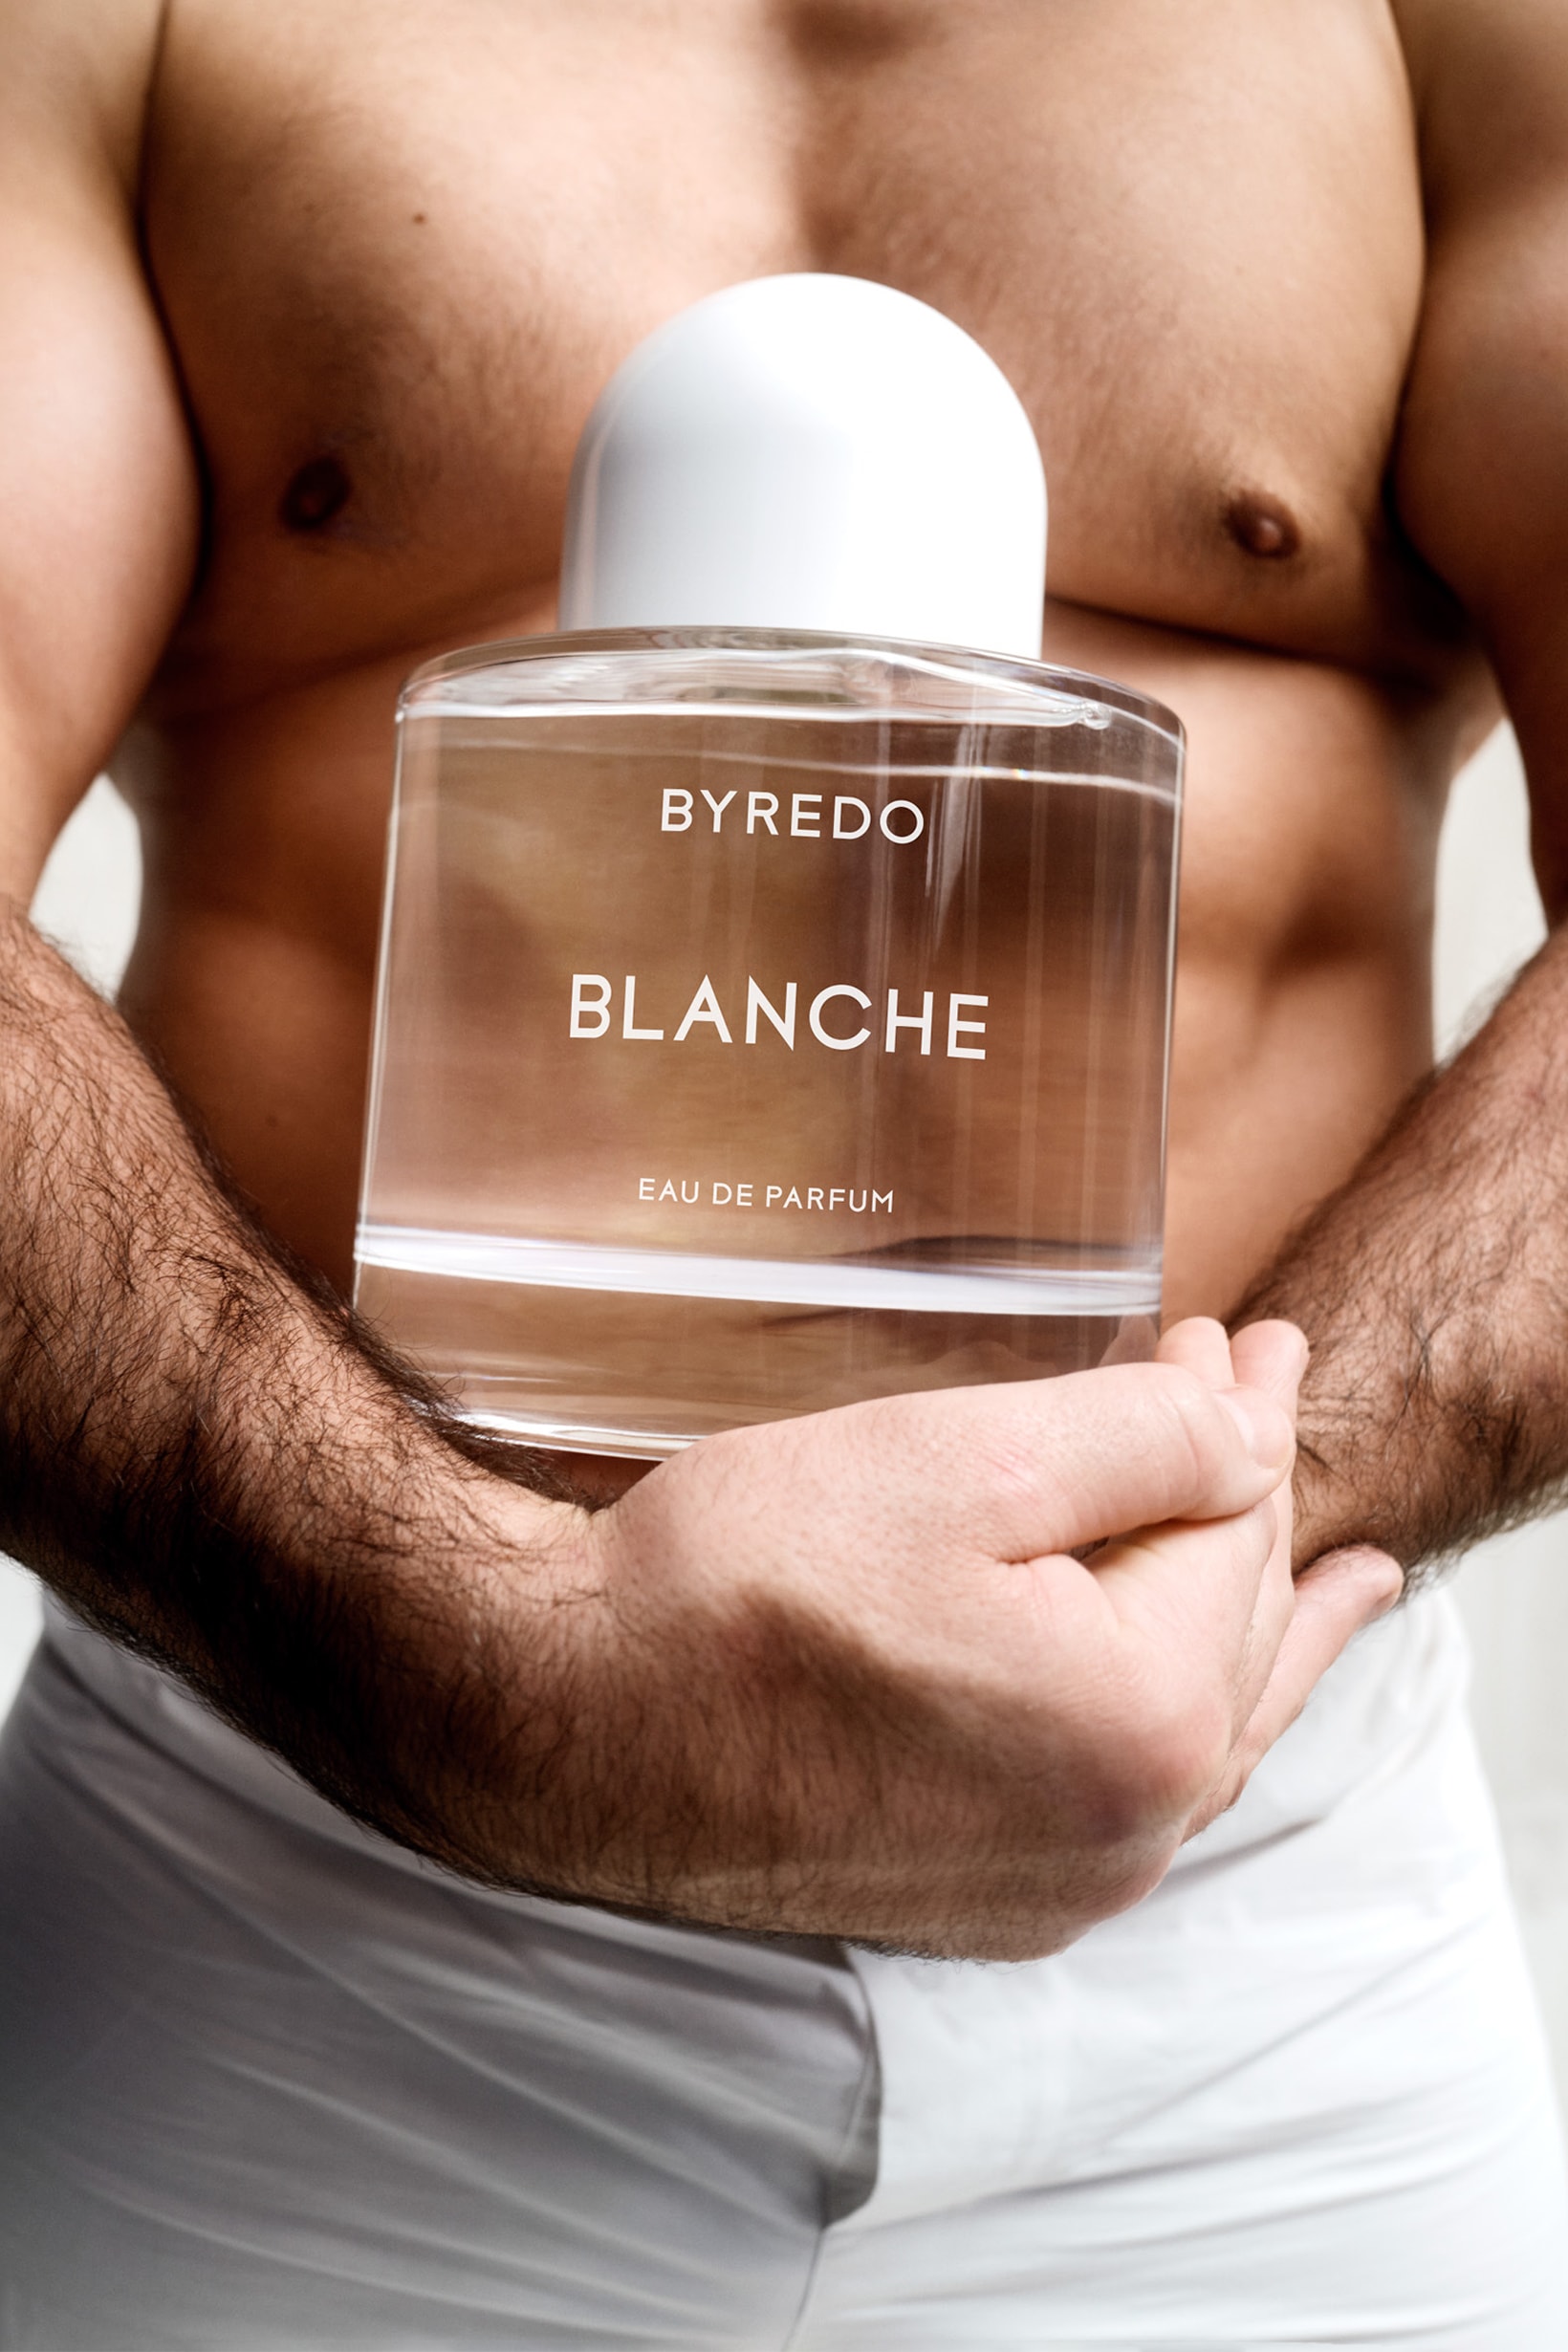 Byredo "Blanche" Collector's Edition Perfume Bottle Campaign